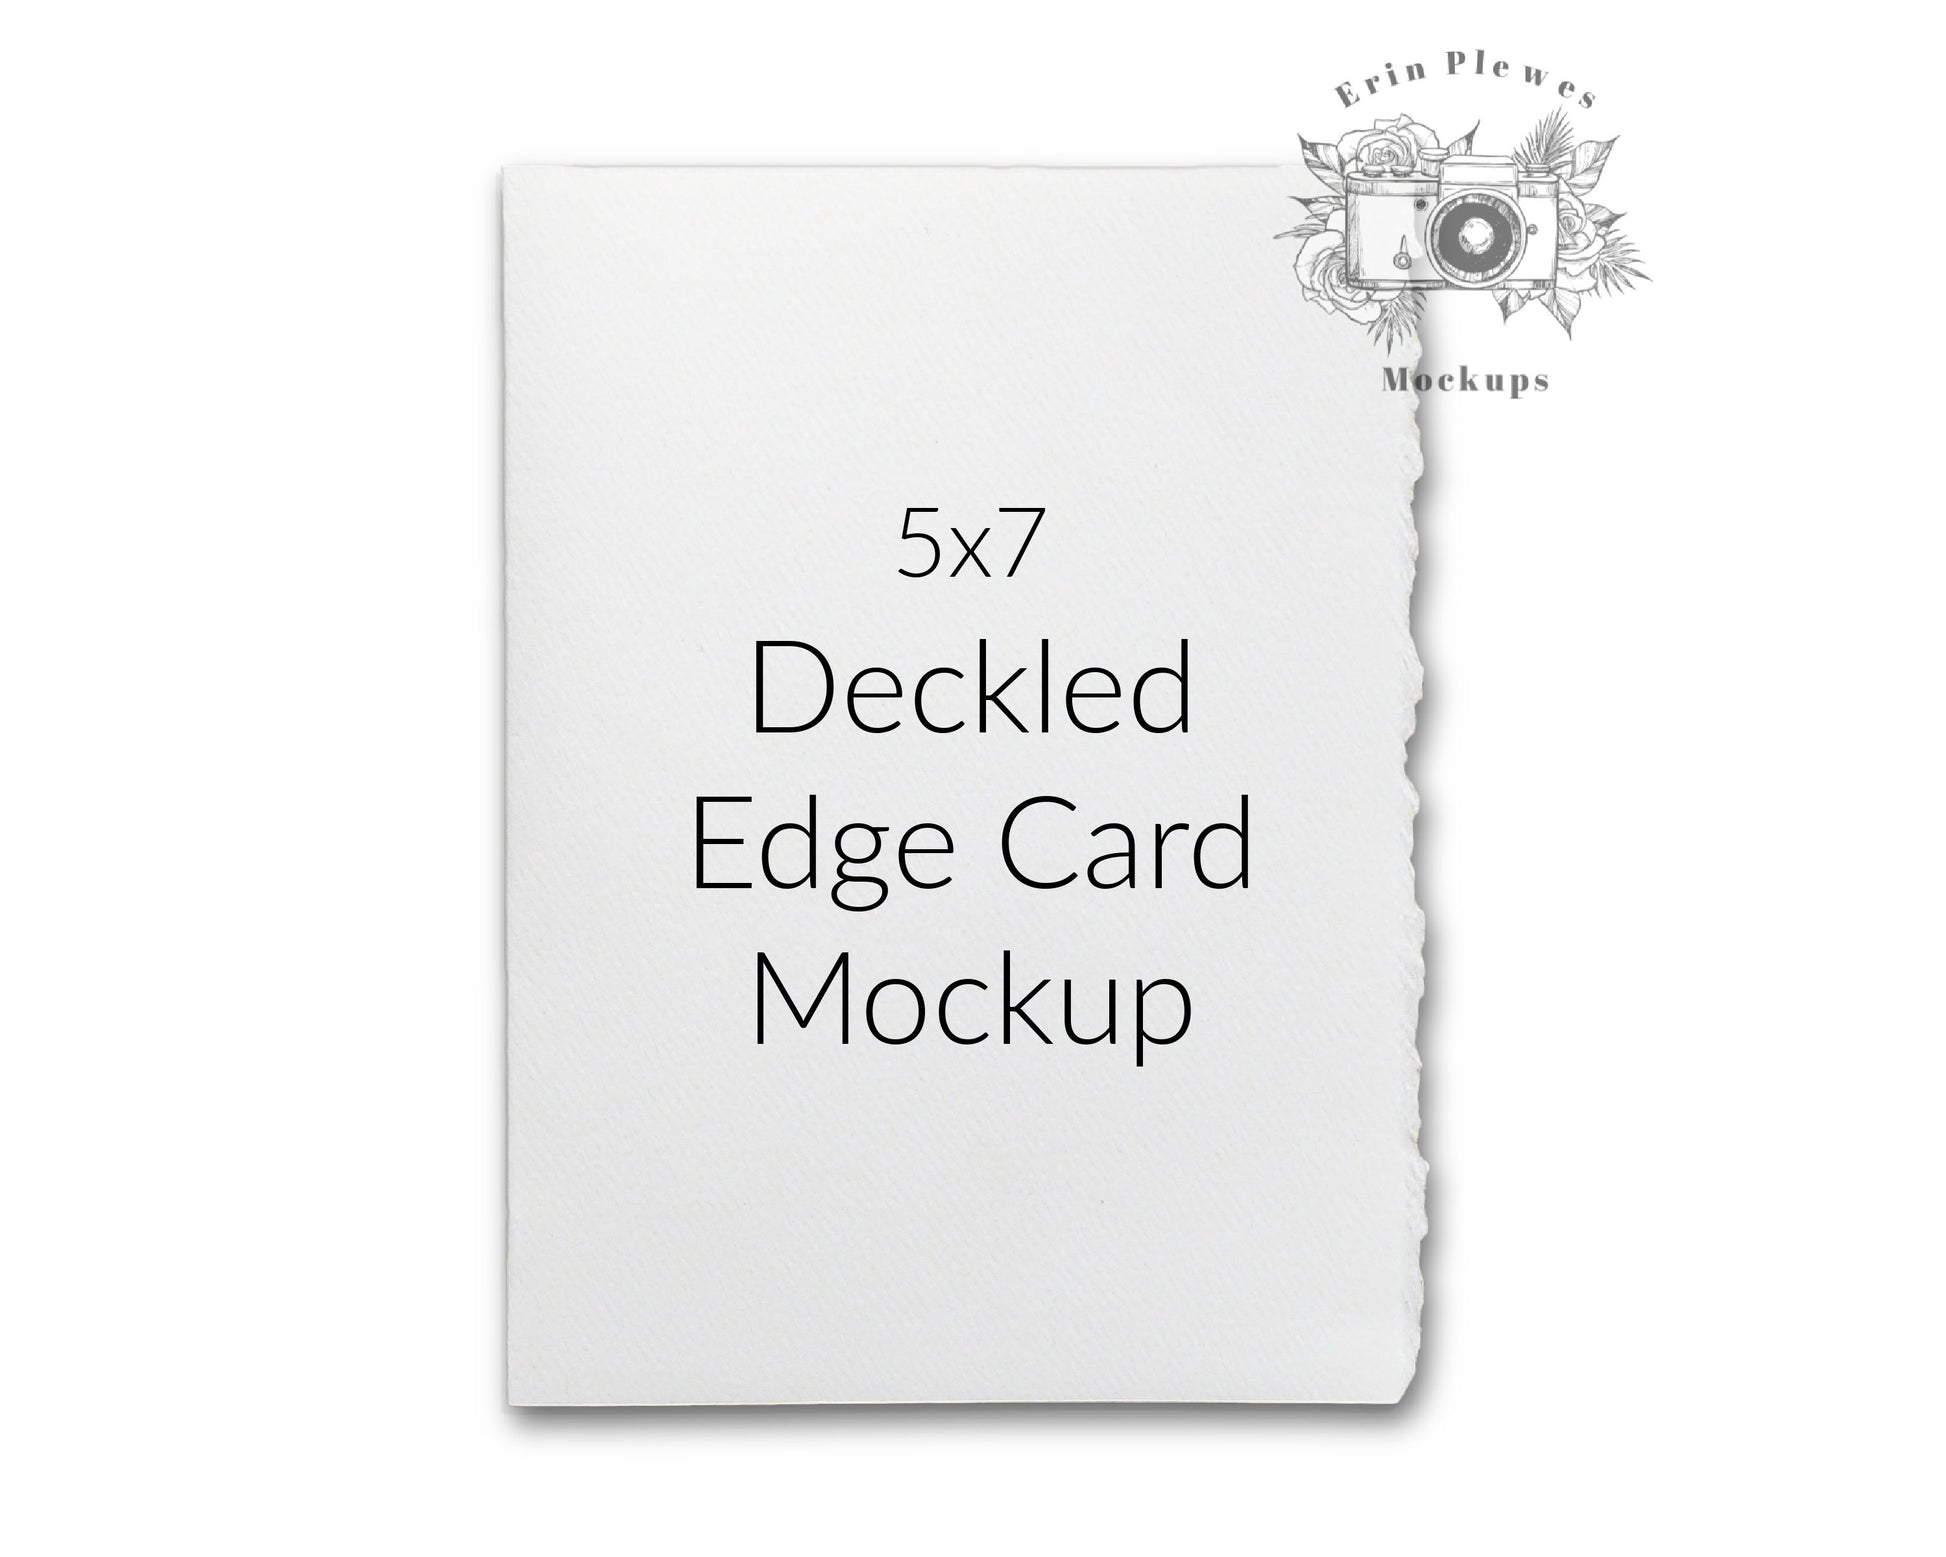 5x7 Card Mockup with Deckle Edge, Strathmore Greeting Card Mock Up, Vertical Deckled Edge Card Mockup, Jpeg PNG Instant Digital Download